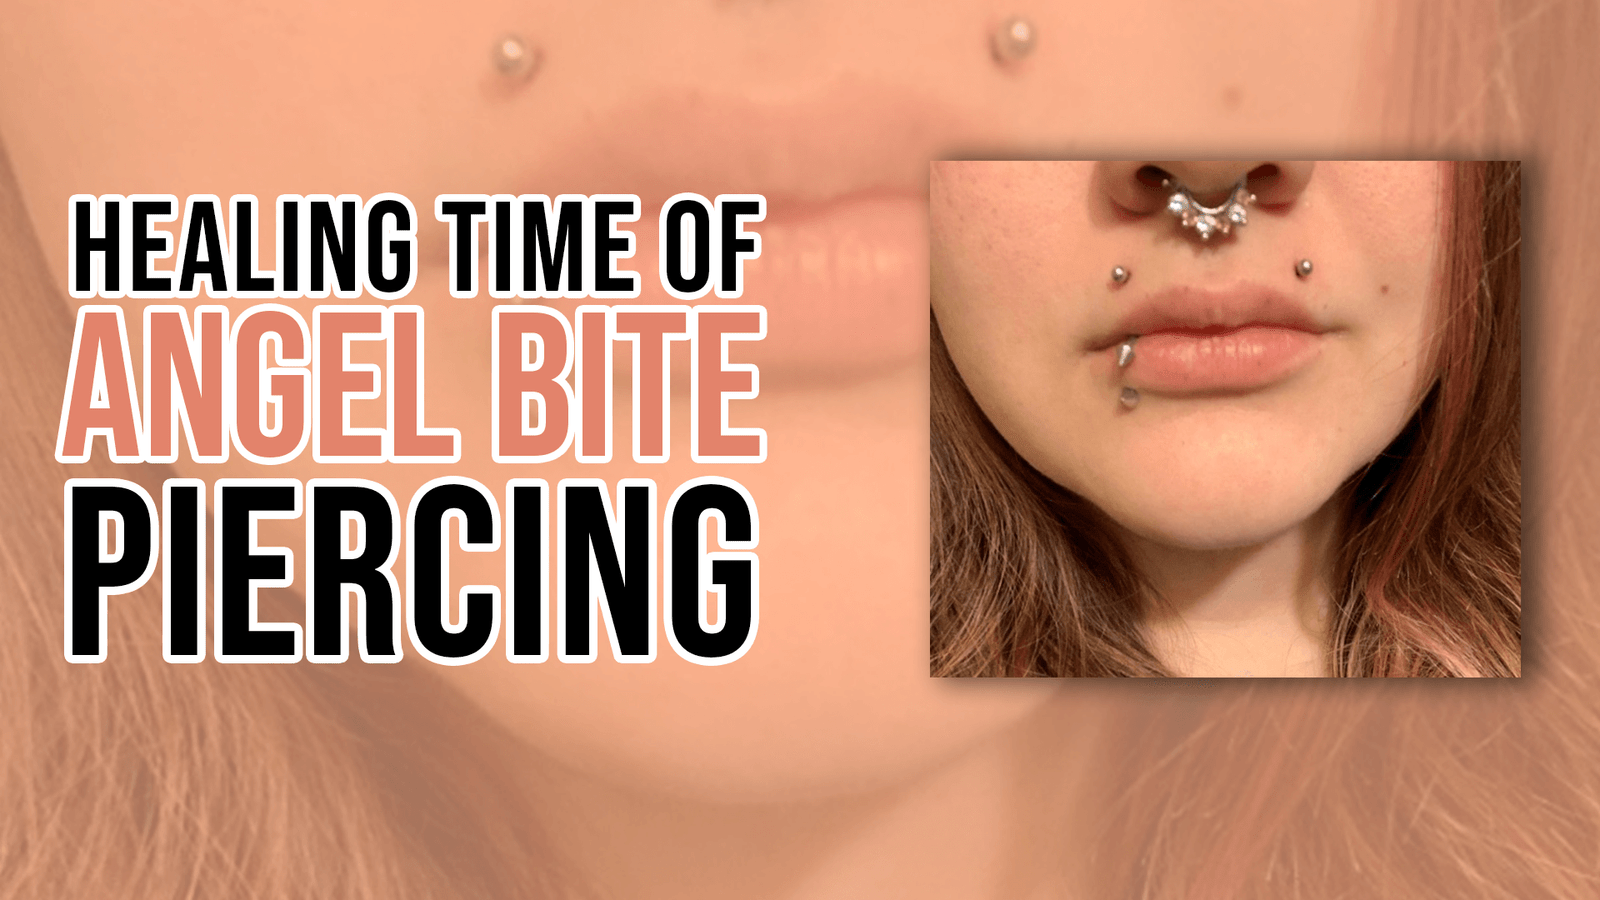 Healing Time of Angel Bite Piercing